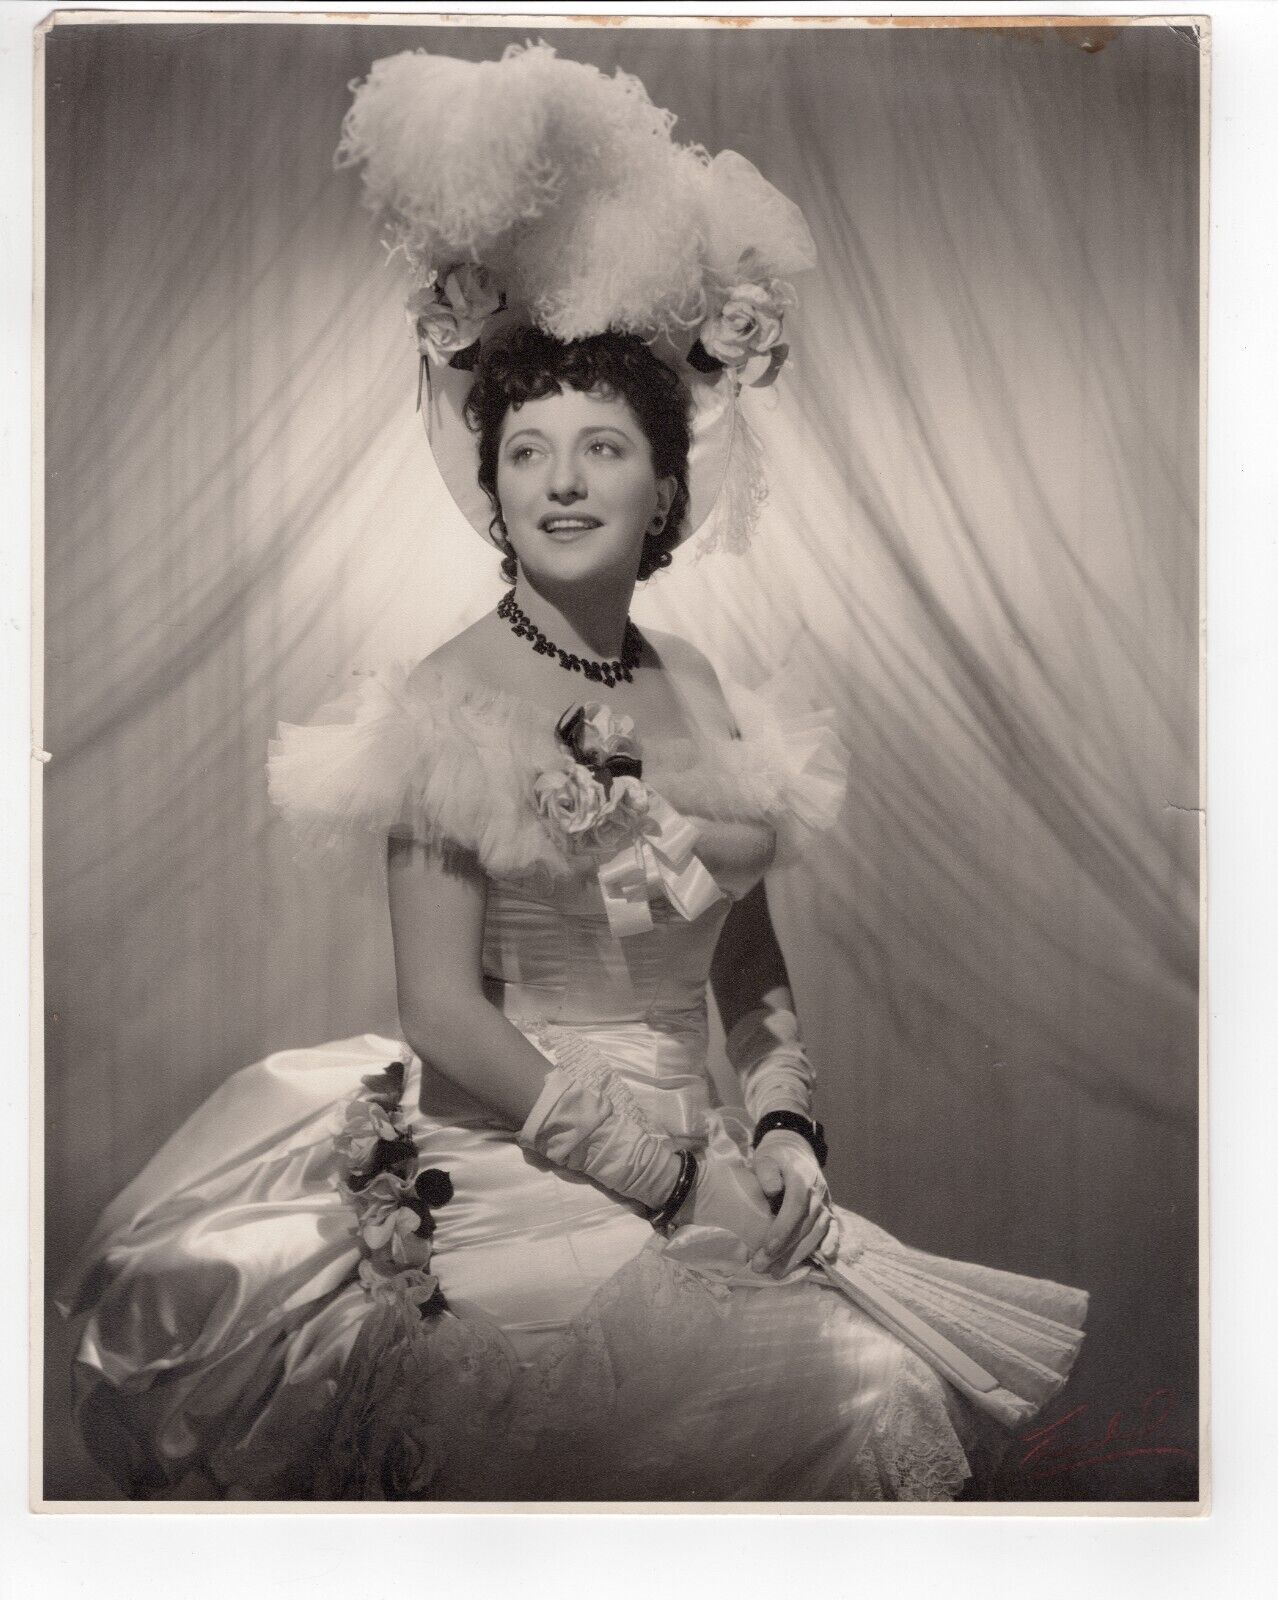 Original 1940s Large Format Photo Actress Helen Morgan Signed by Photographer